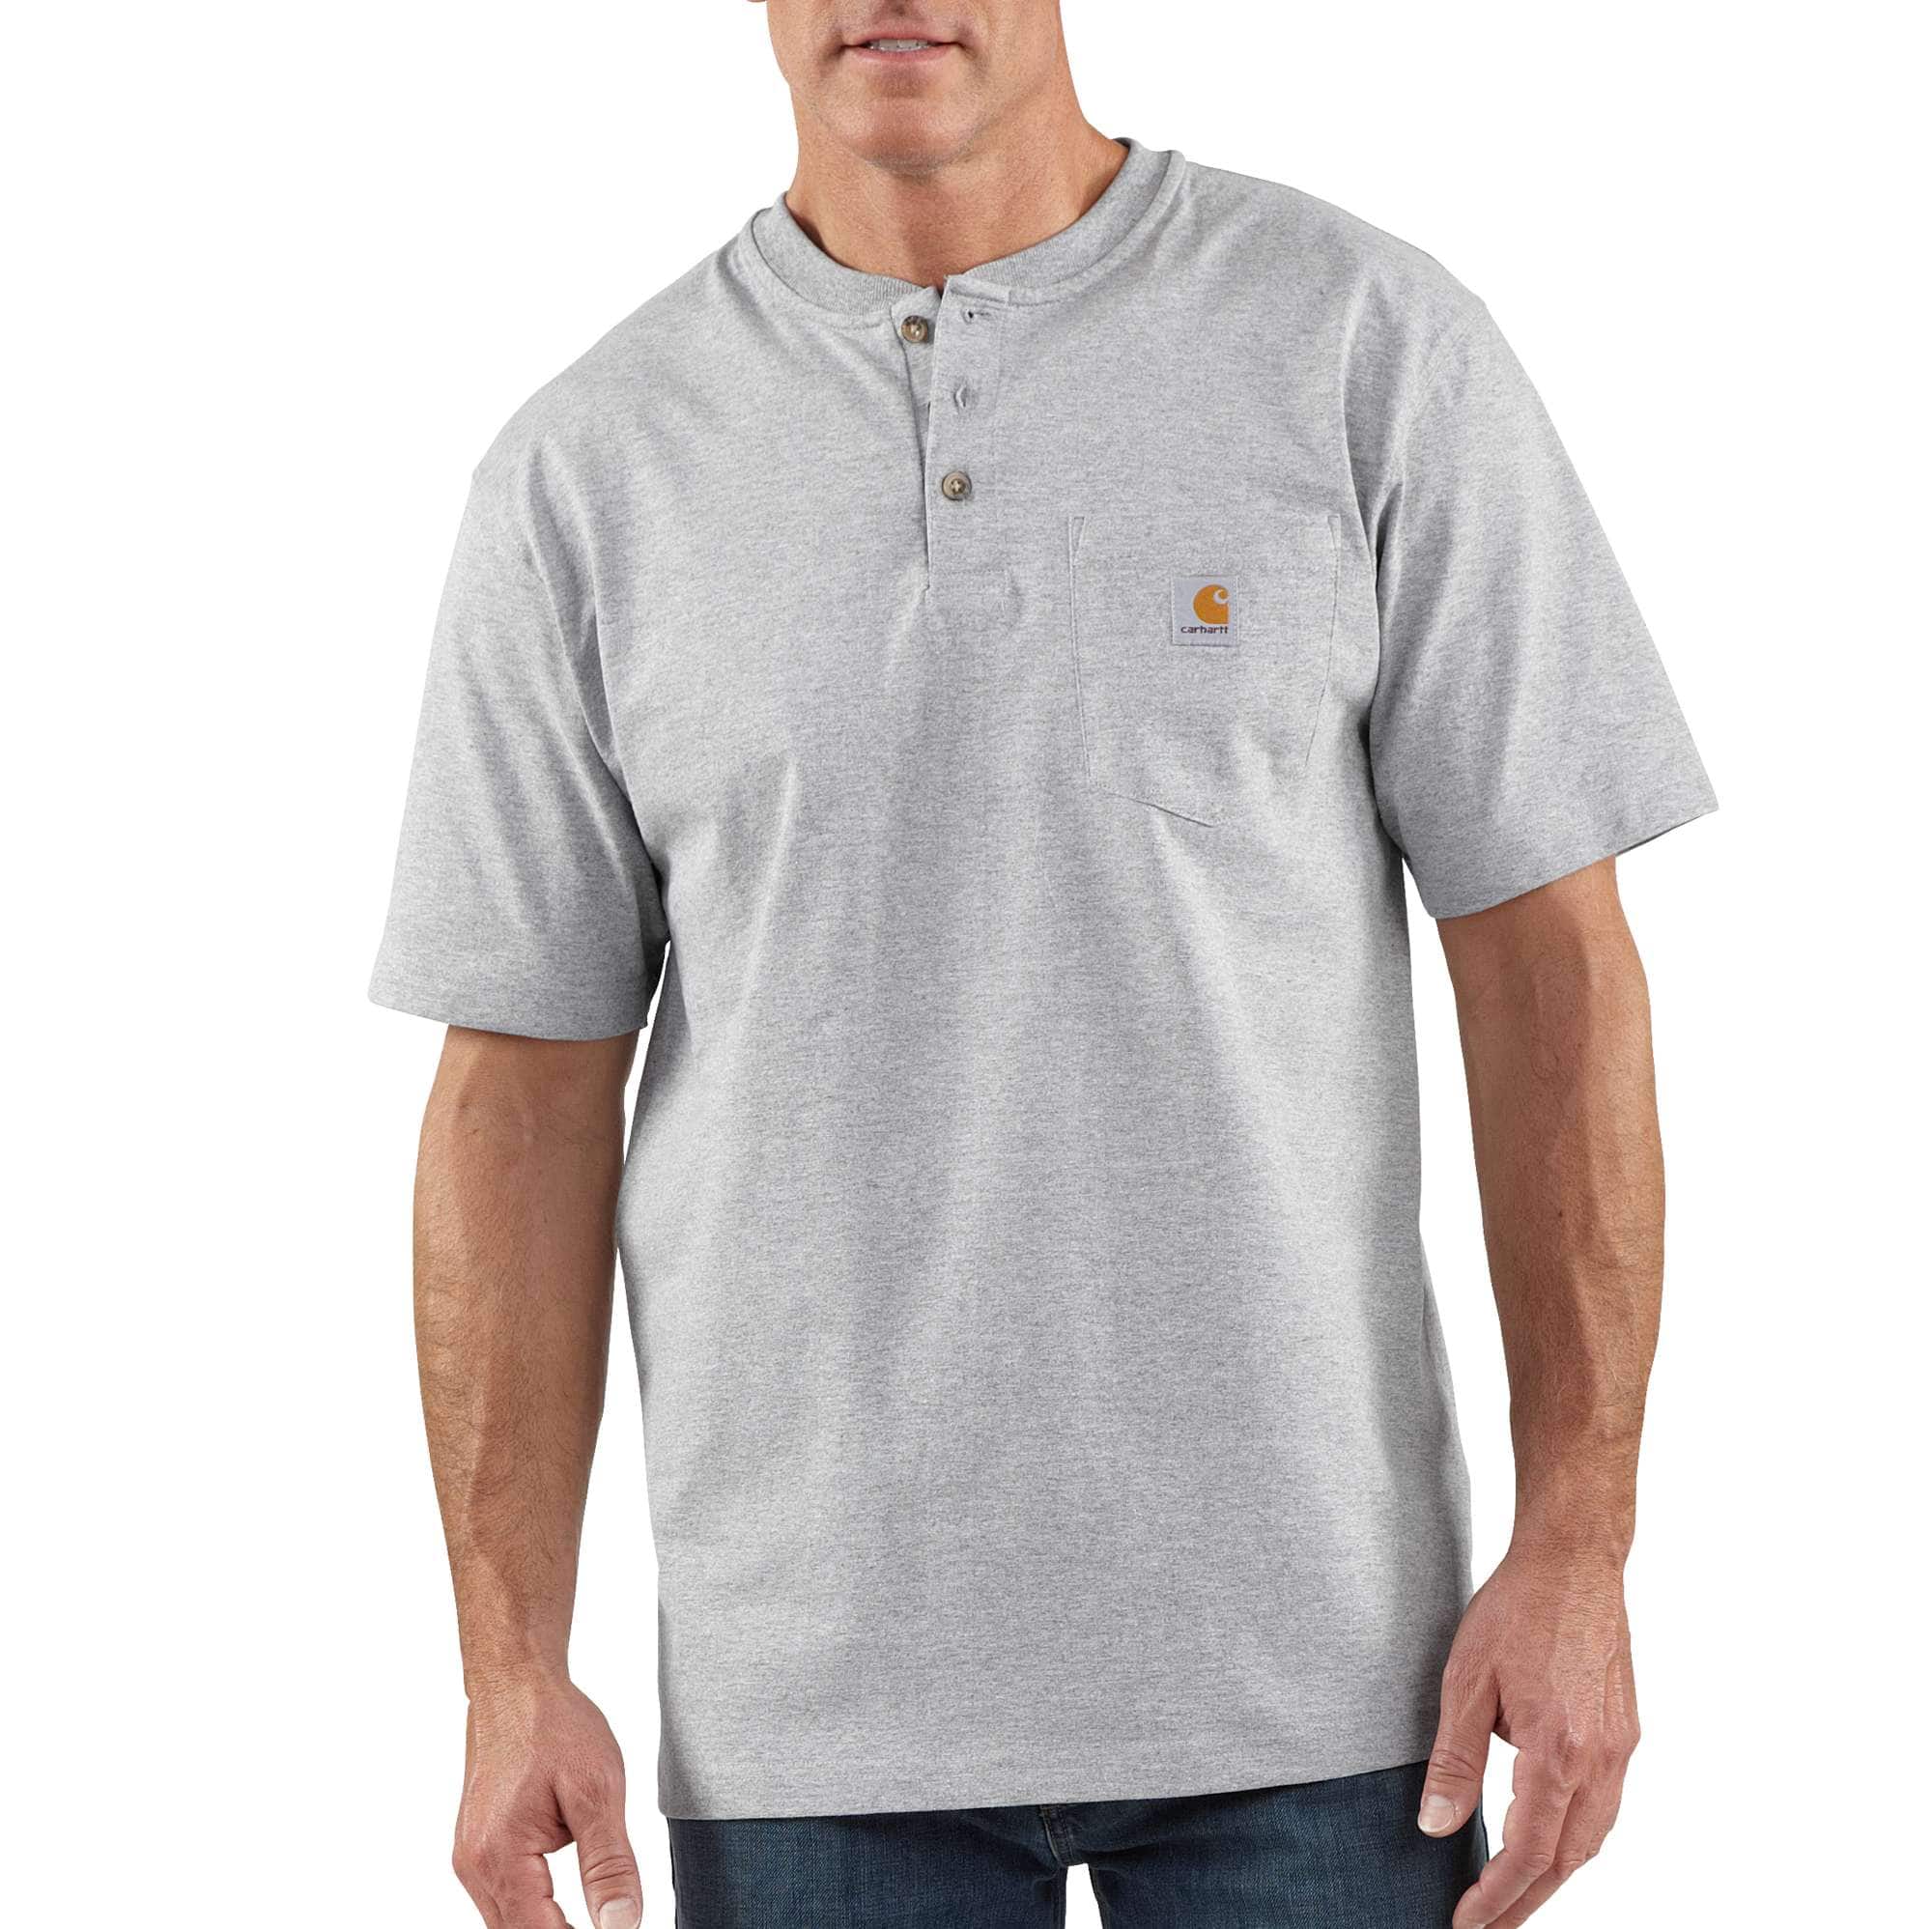 Men's Uniform T-shirts & Company Tees for Men | Carhartt Company Gear